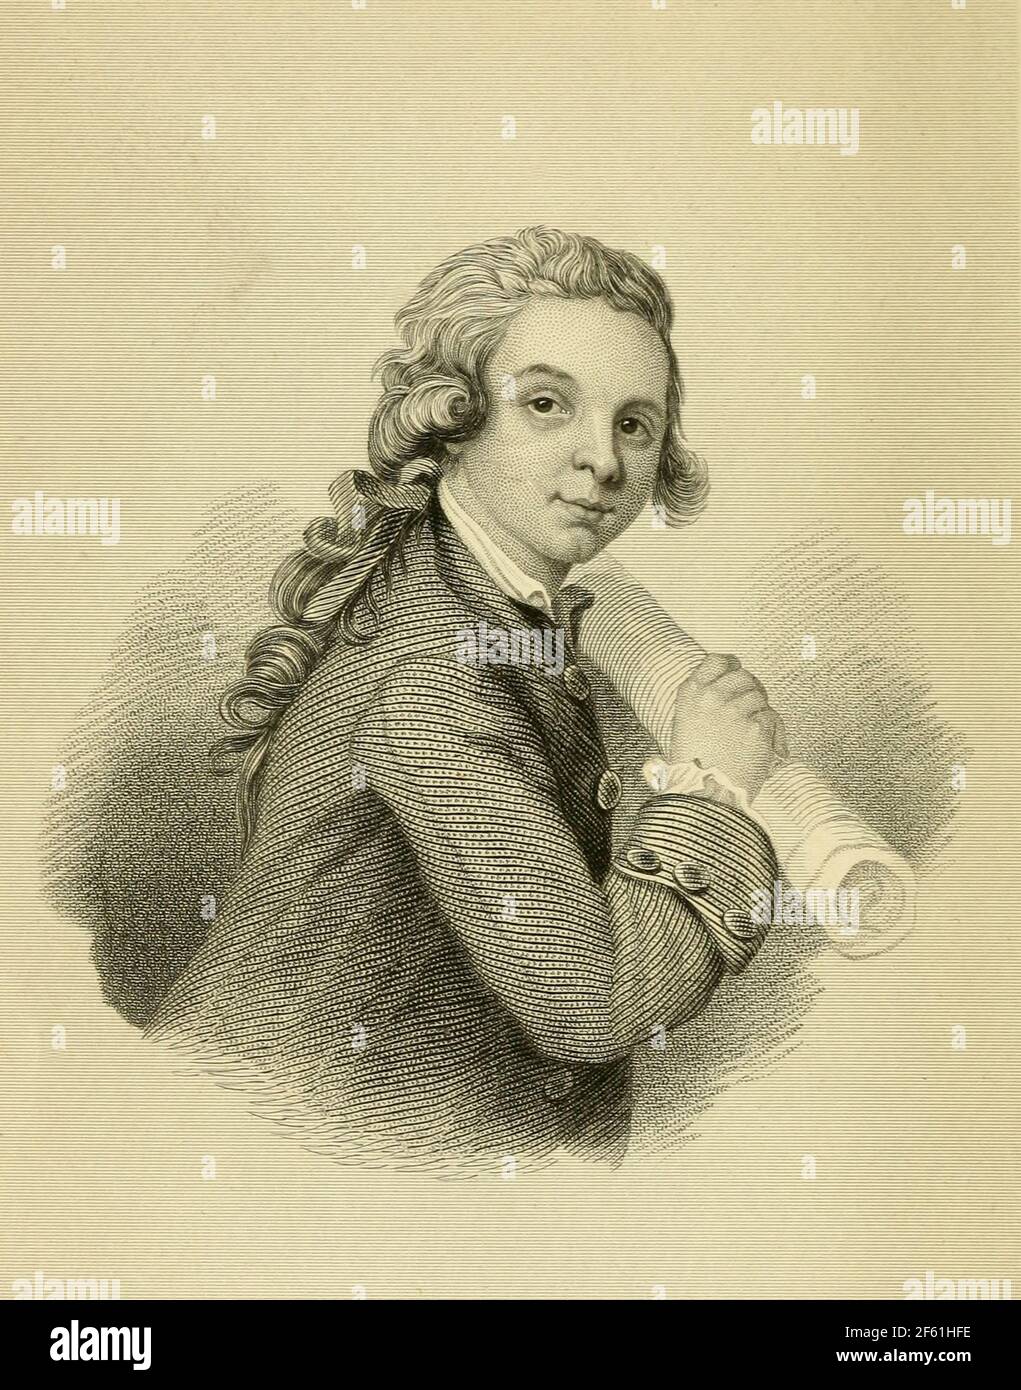 Giovane Wolfgang Amadeus Mozart, compositore austriaco Foto Stock